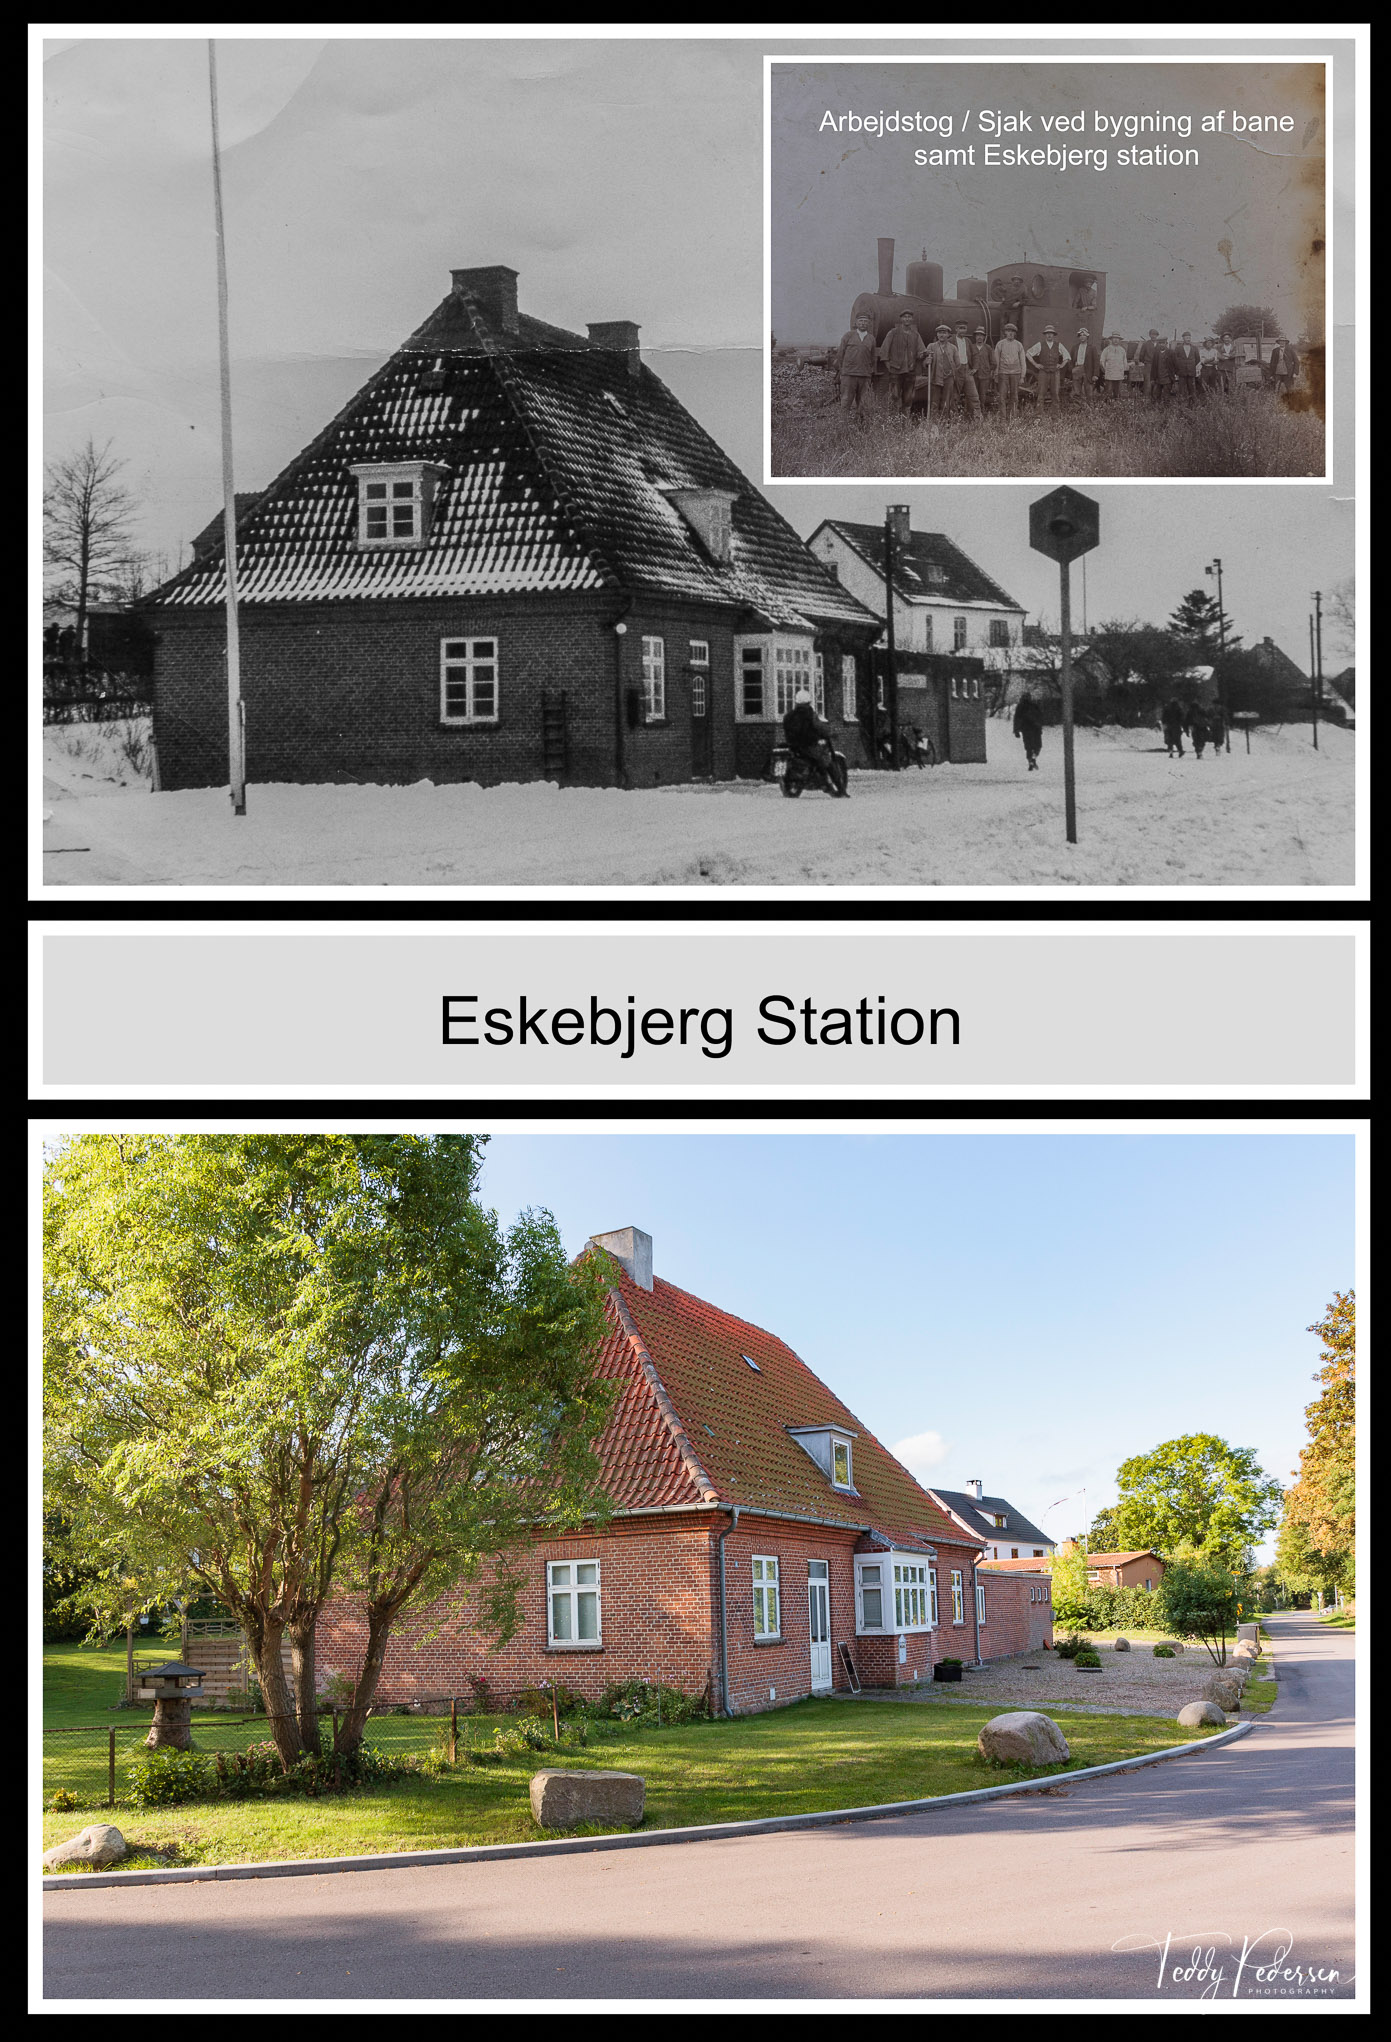 003-027-Eskebjerg-Station_HighRes_LowRes